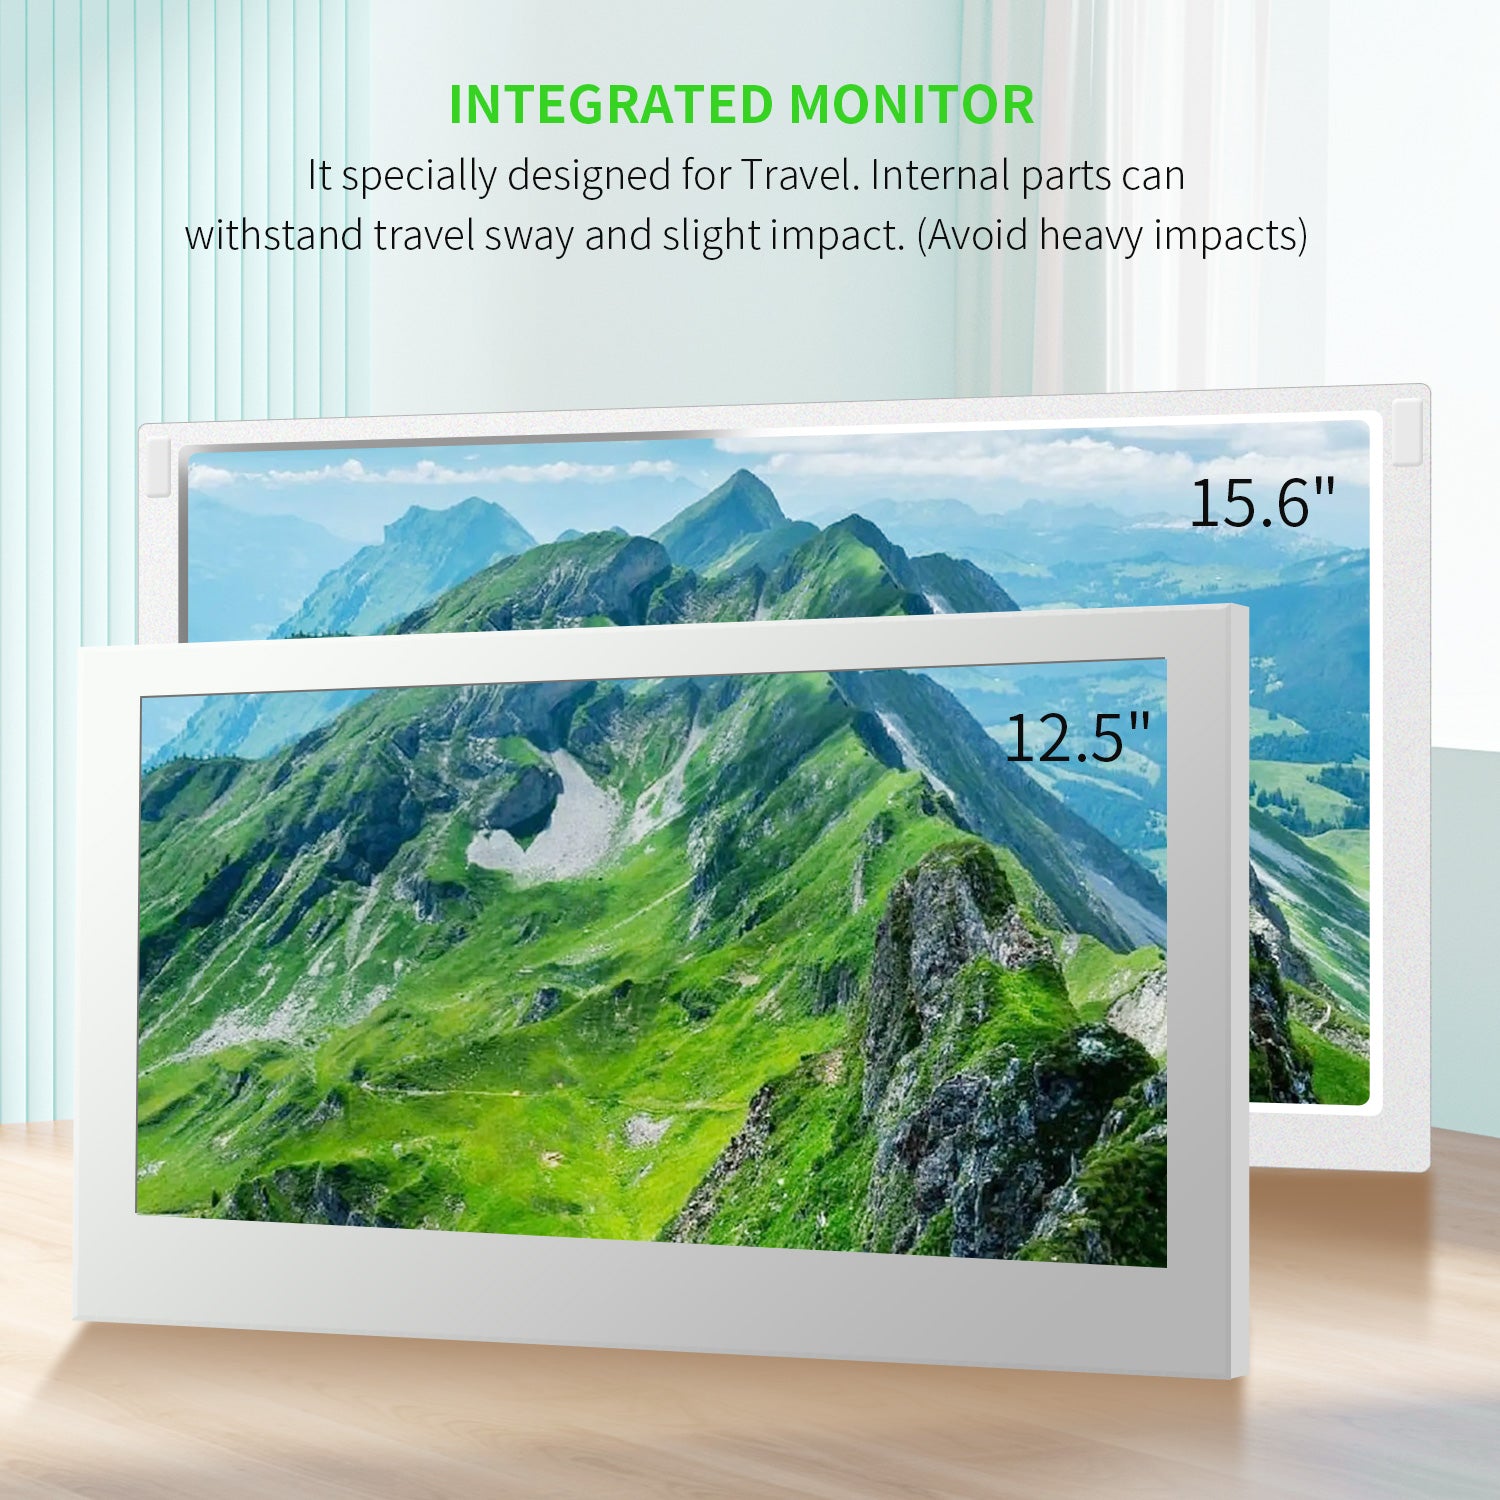 4k Ips HDR Xbox Series X Portable Gaming Monitor 12.5 Inch Display